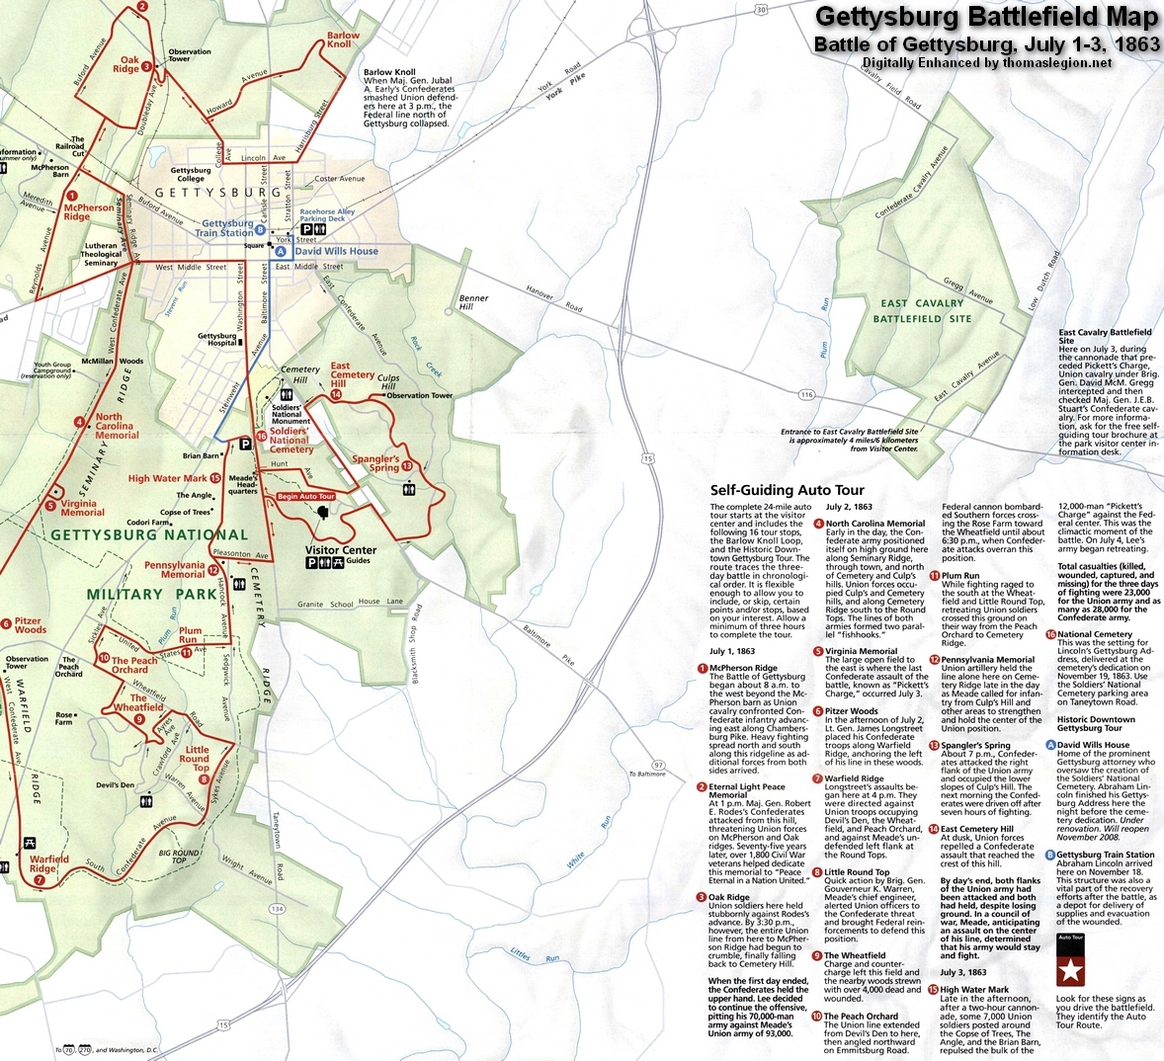 Official Cemetery Ridge Map.jpg